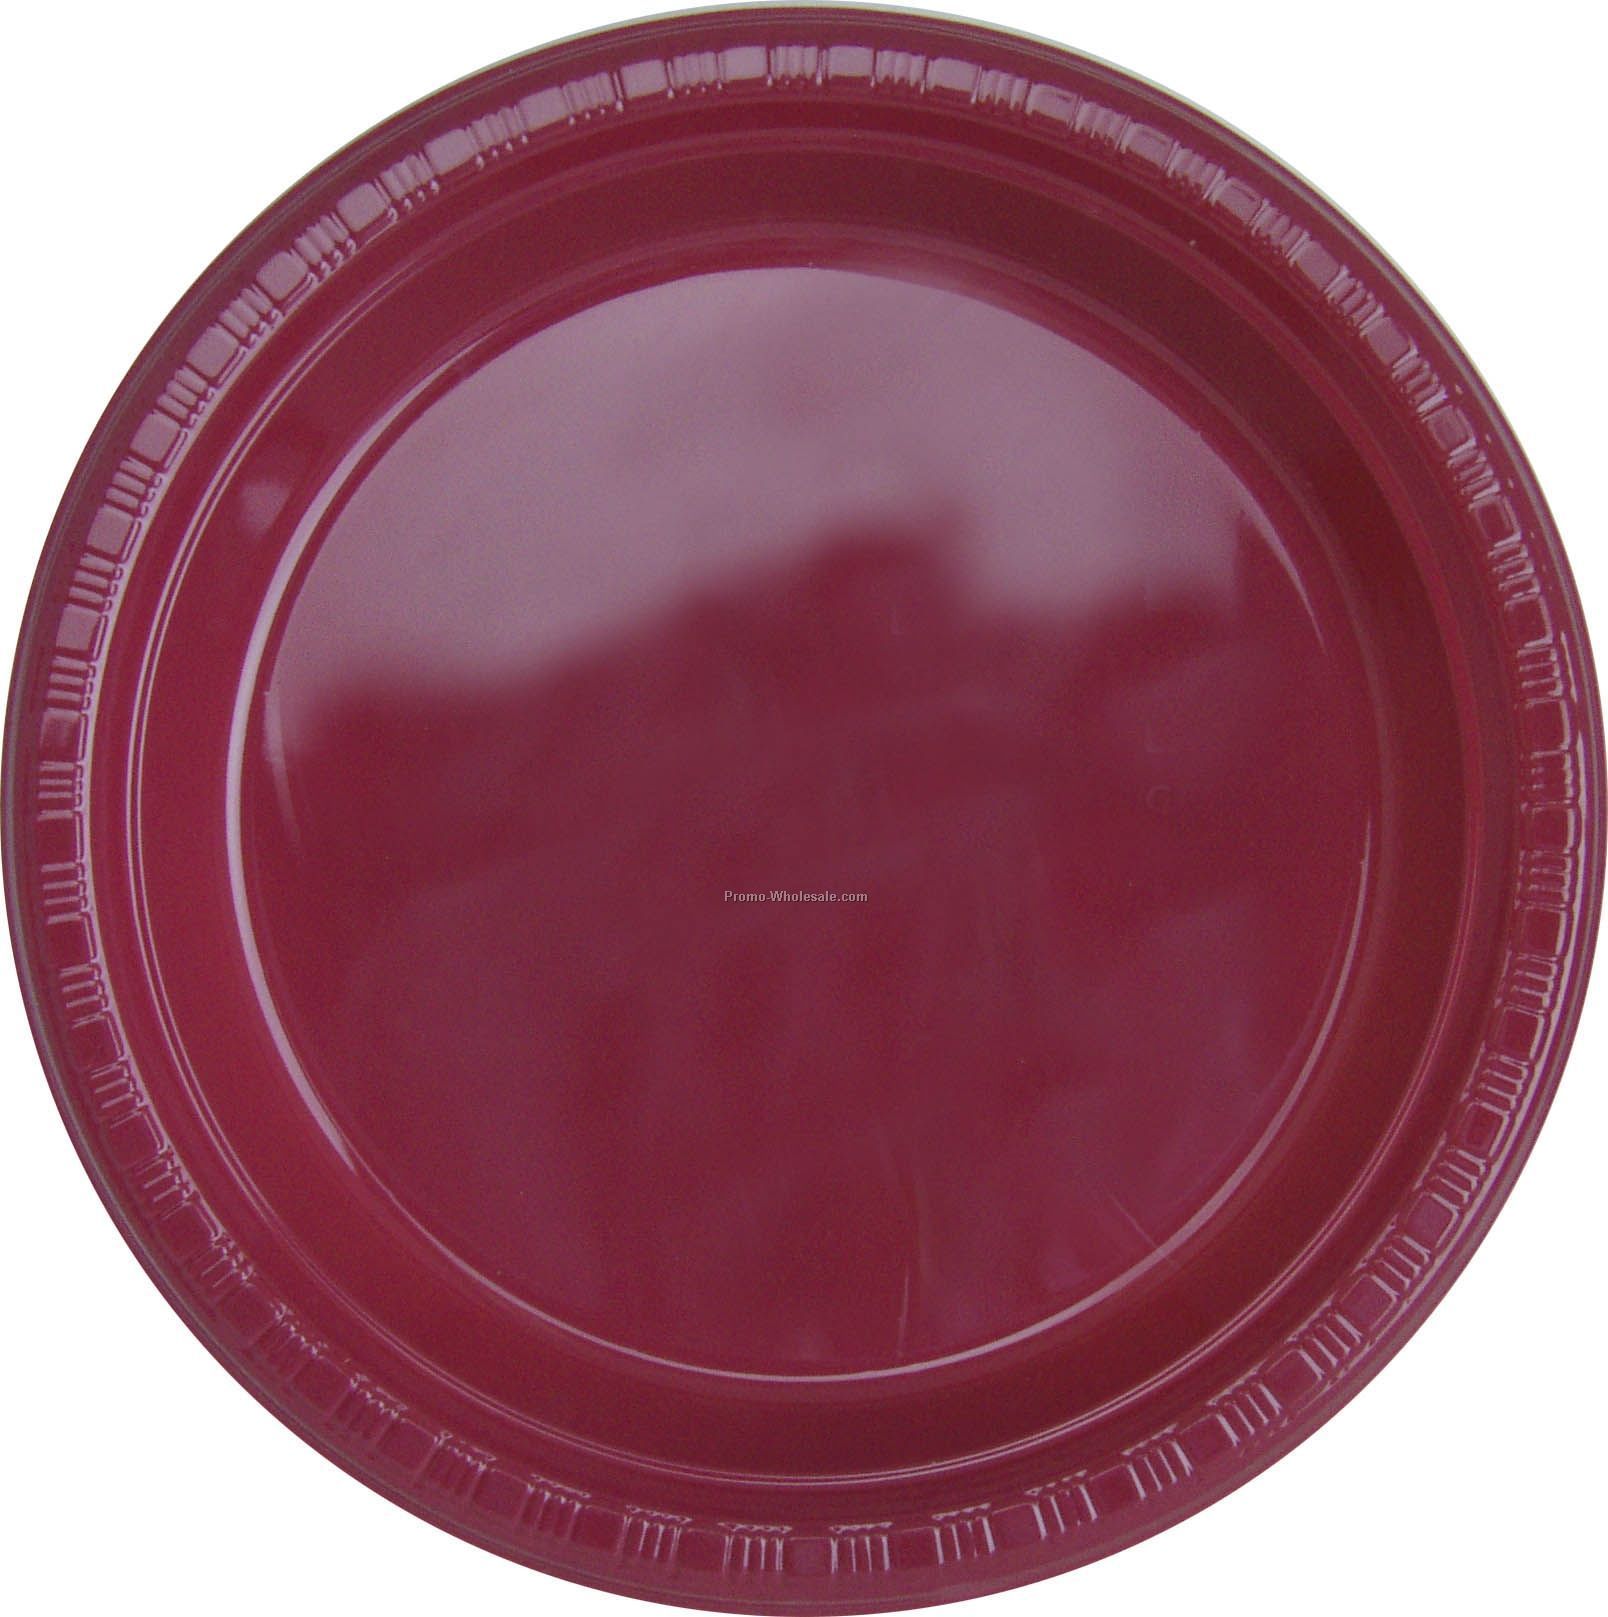 Colorware 9" Burgundy Royale Plate